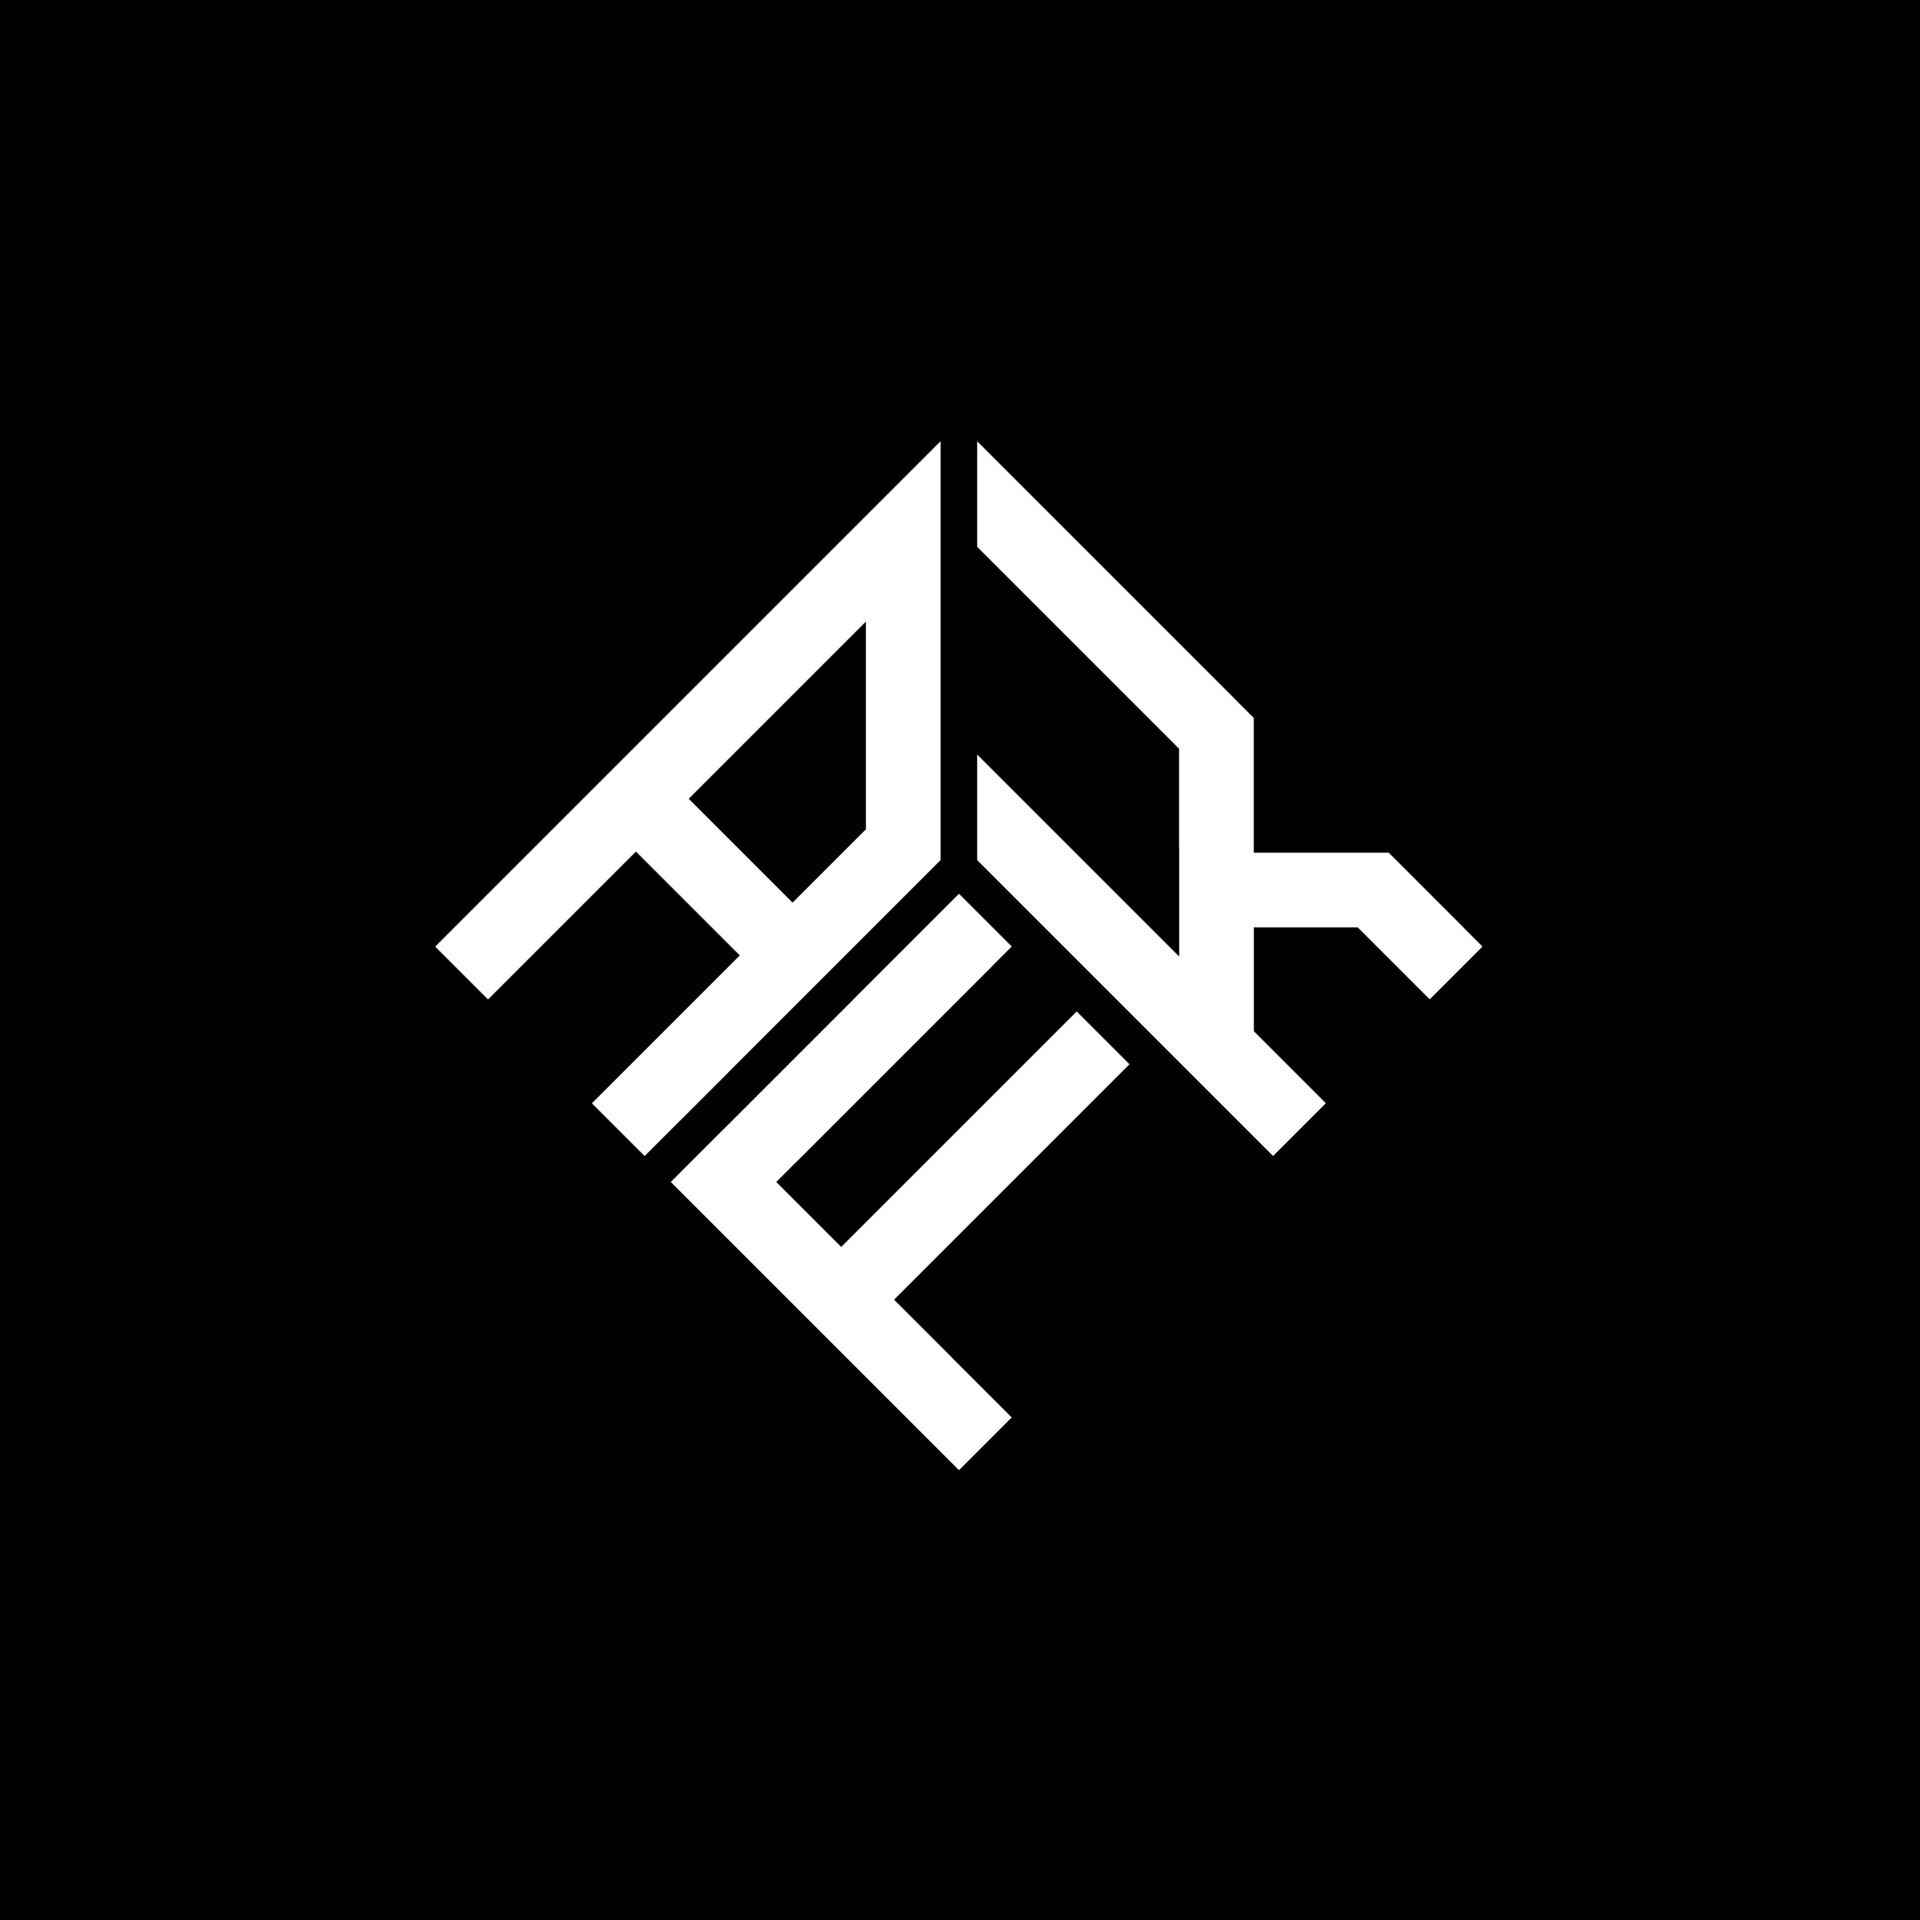 diseño de logotipo de letra afk sobre fondo negro. concepto de logotipo ...